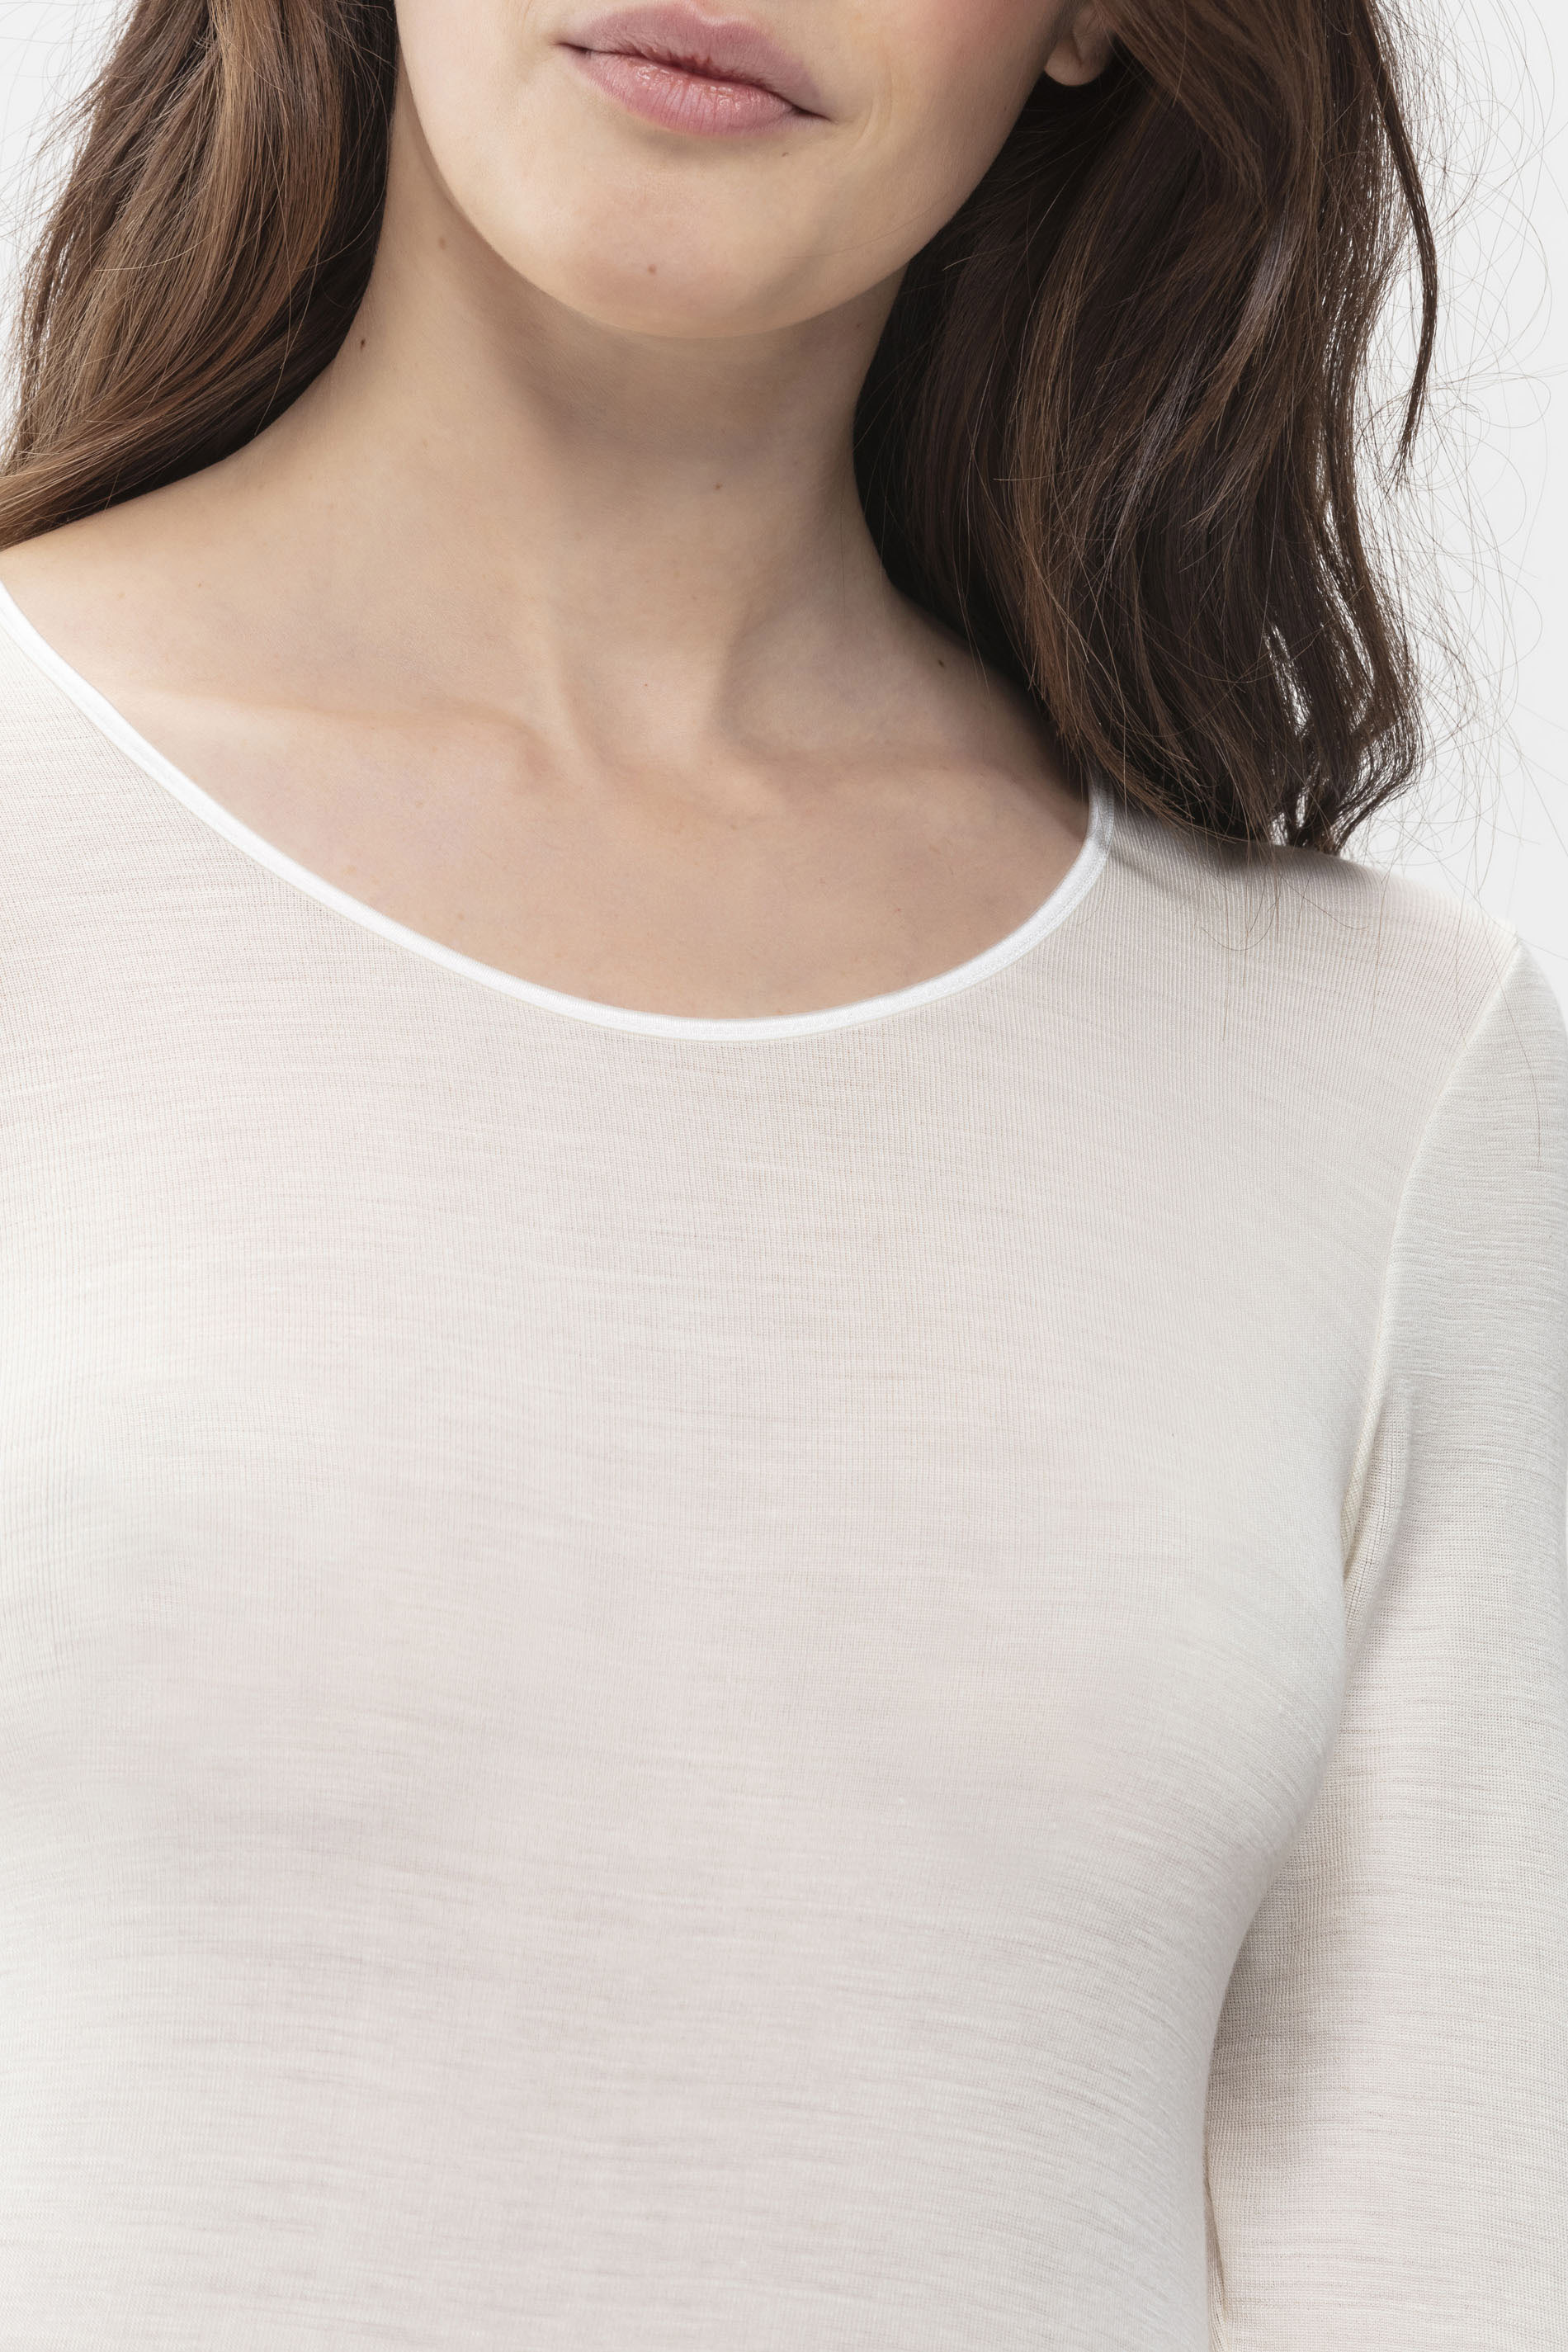 Shirt langarm Weiss Serie Exquisite Detailansicht 01 | mey®